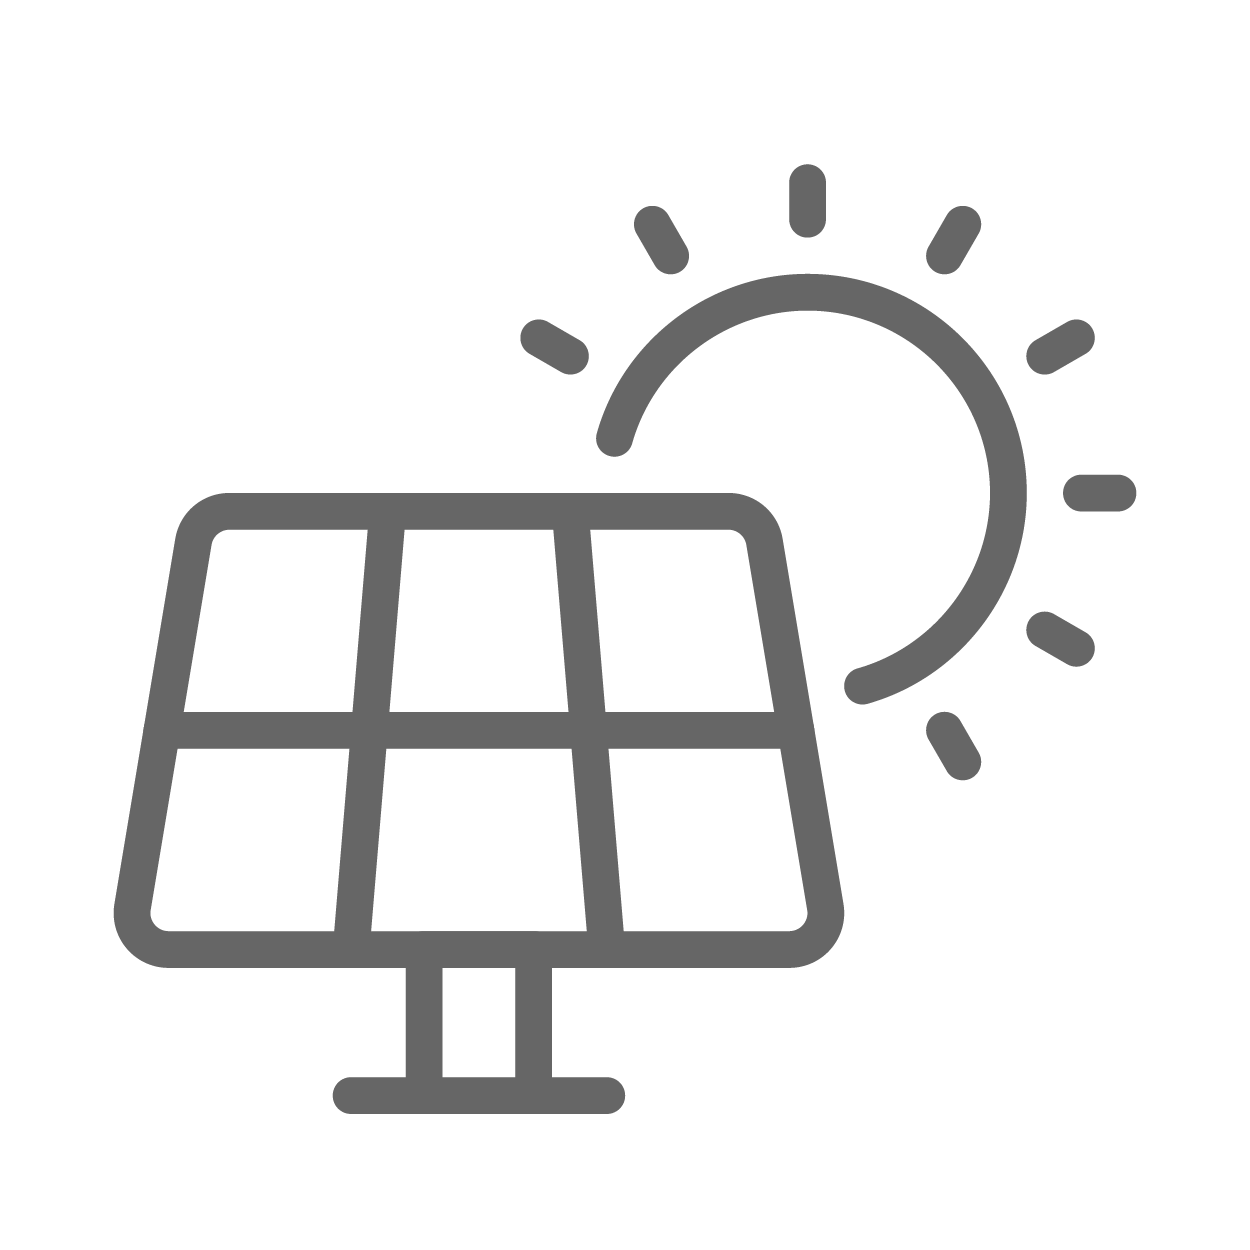 Solar panelling logo